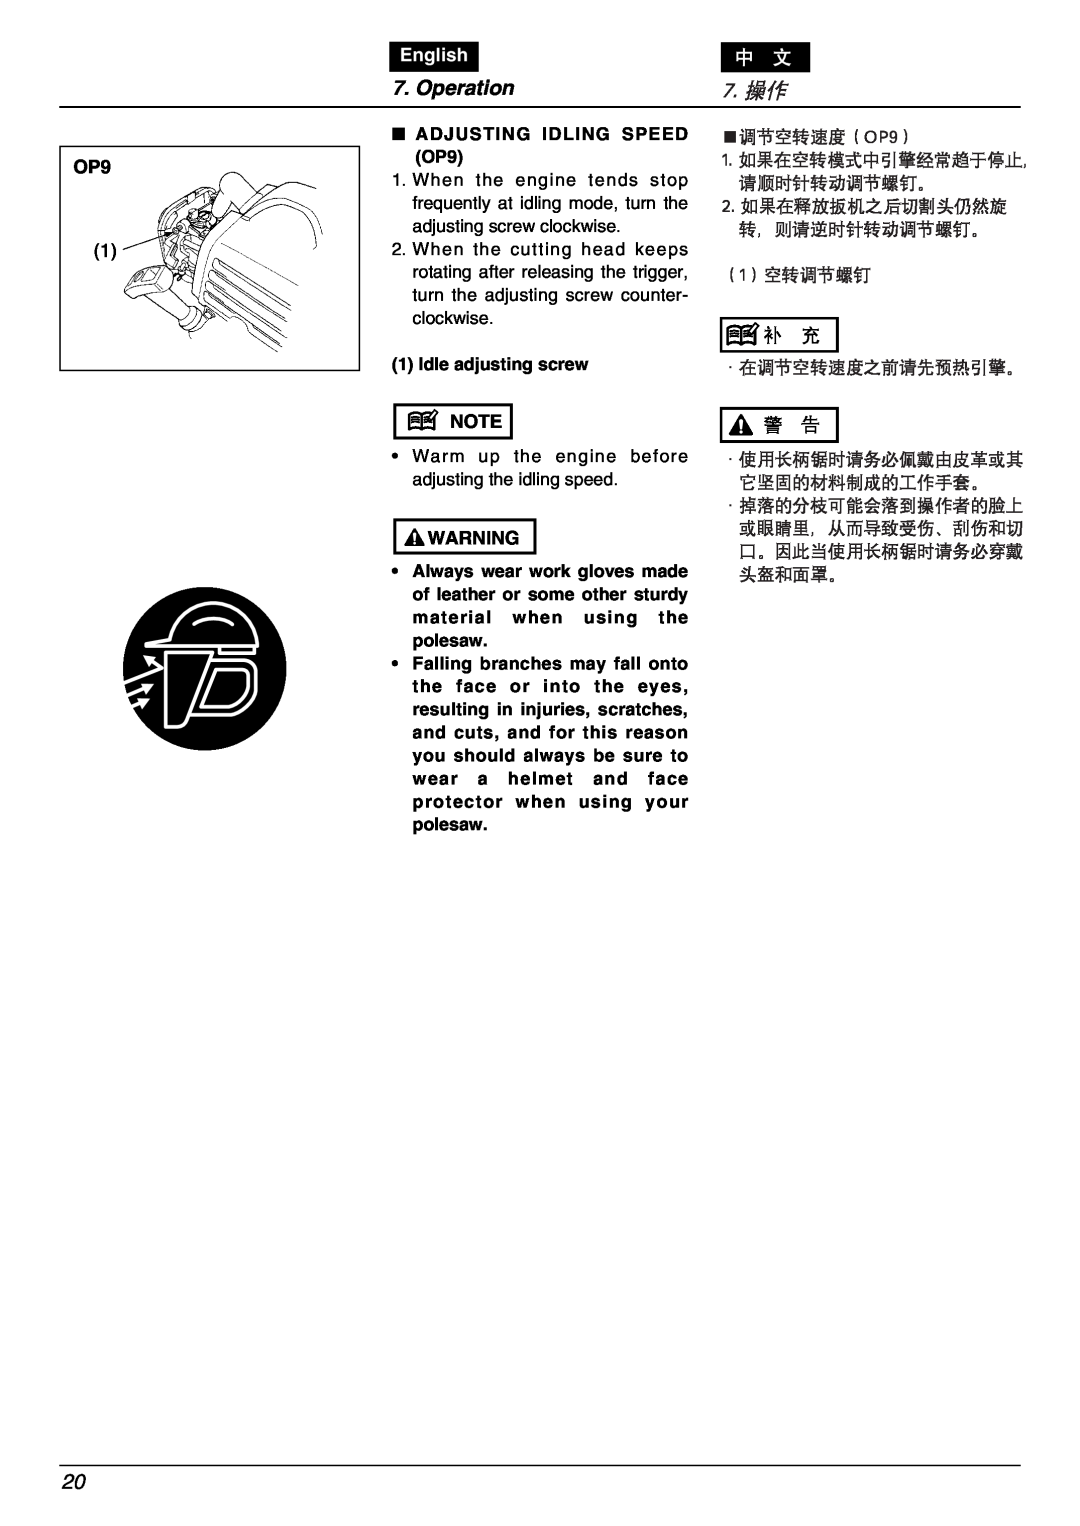 Zenoah PSJ2300 owner manual ADJUSTING IDLING SPEED OP9, Idle adjusting screw, Operation, 7. 操作, English 